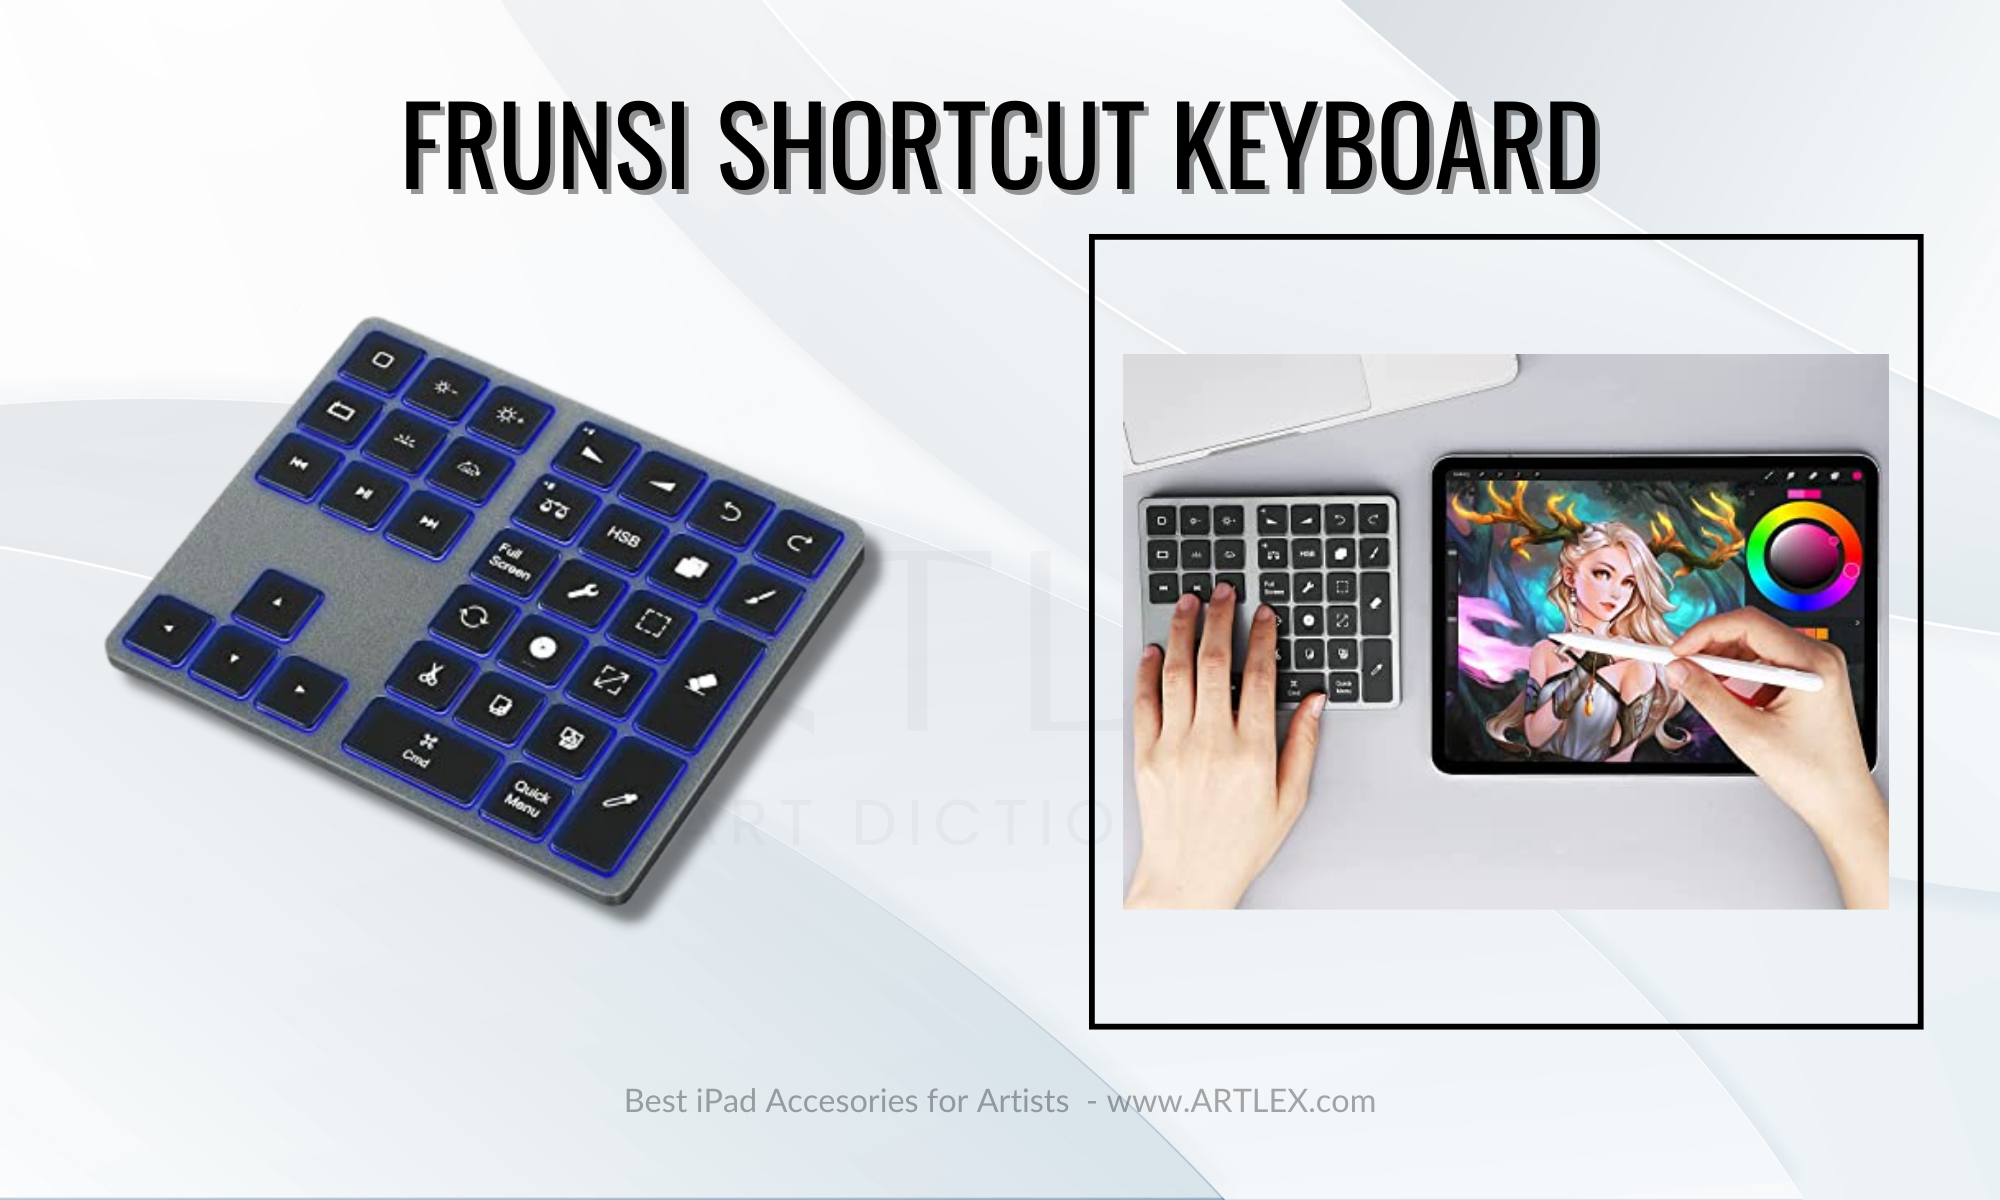 Deuxième meilleur clavier à raccourcis pour iPad - Frunsi Wireless Keyboard